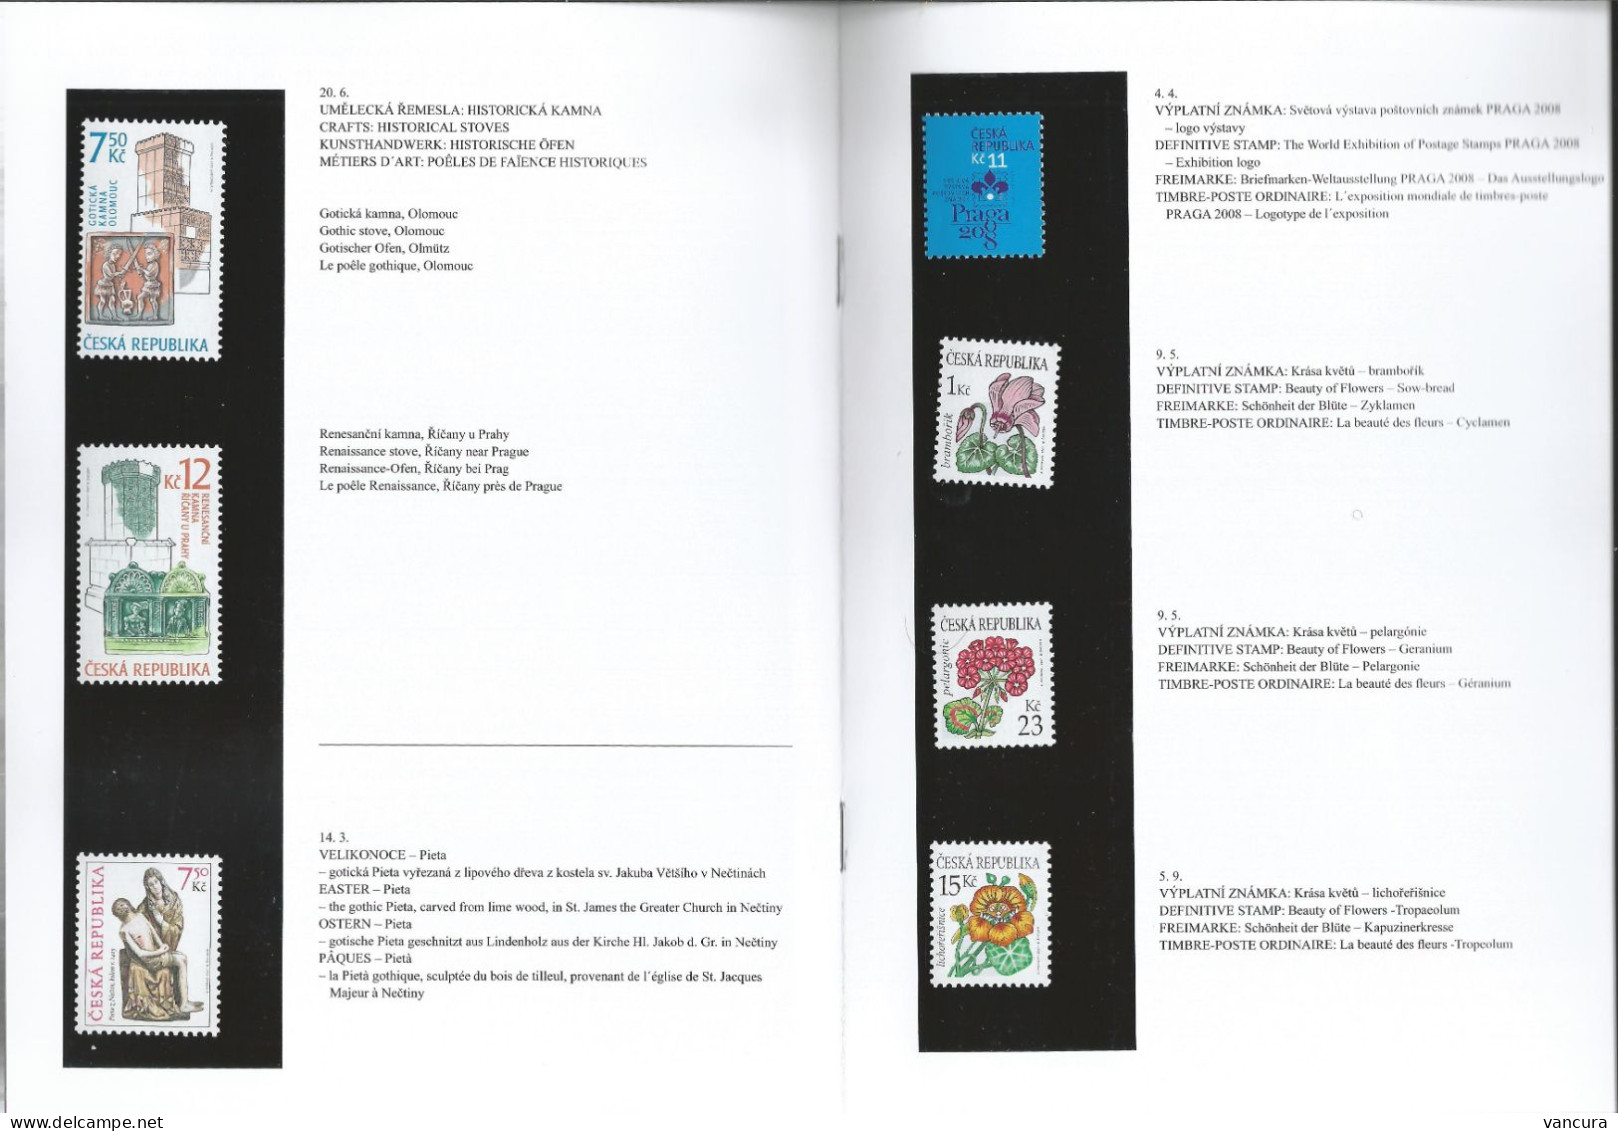 Czech Republic Year Book 2007 (with blackprint)